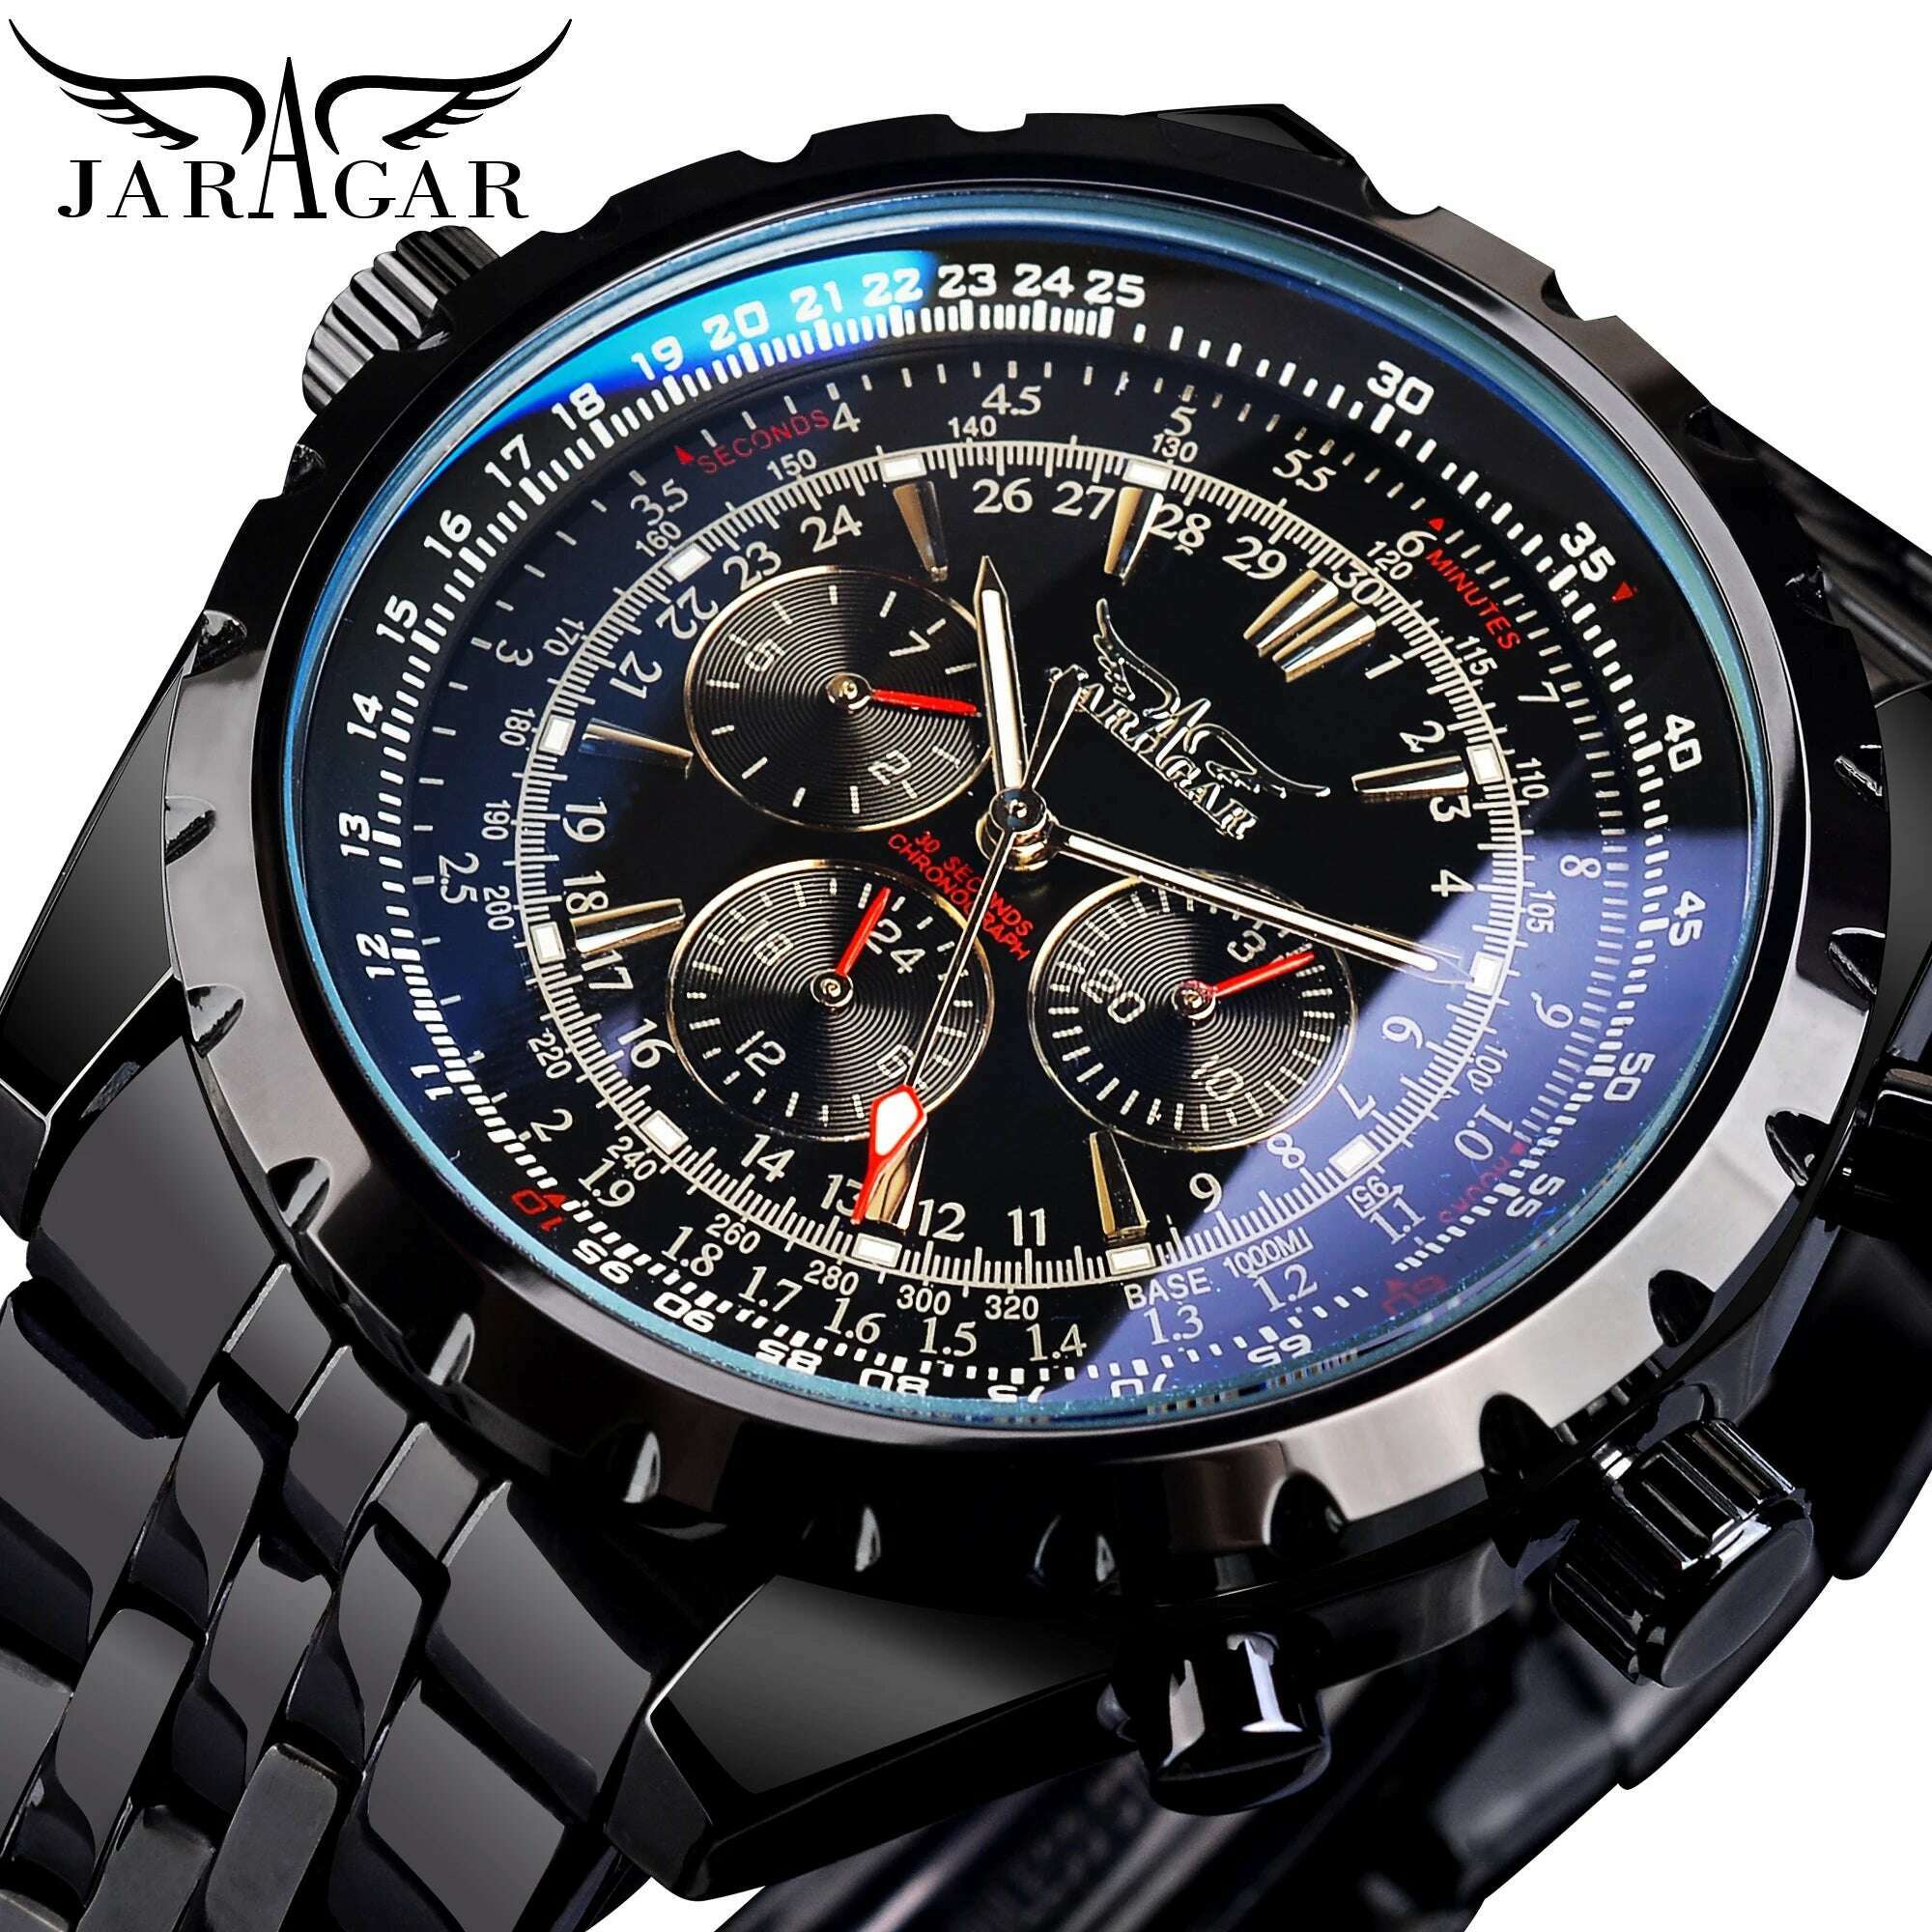 KIMLUD, Jaragar Blue Glass Design Black Silver Automatic Watch Stainless Steel Date Clock Luminous Men Business Mechanical Wristwatch, S1144-9, KIMLUD Womens Clothes